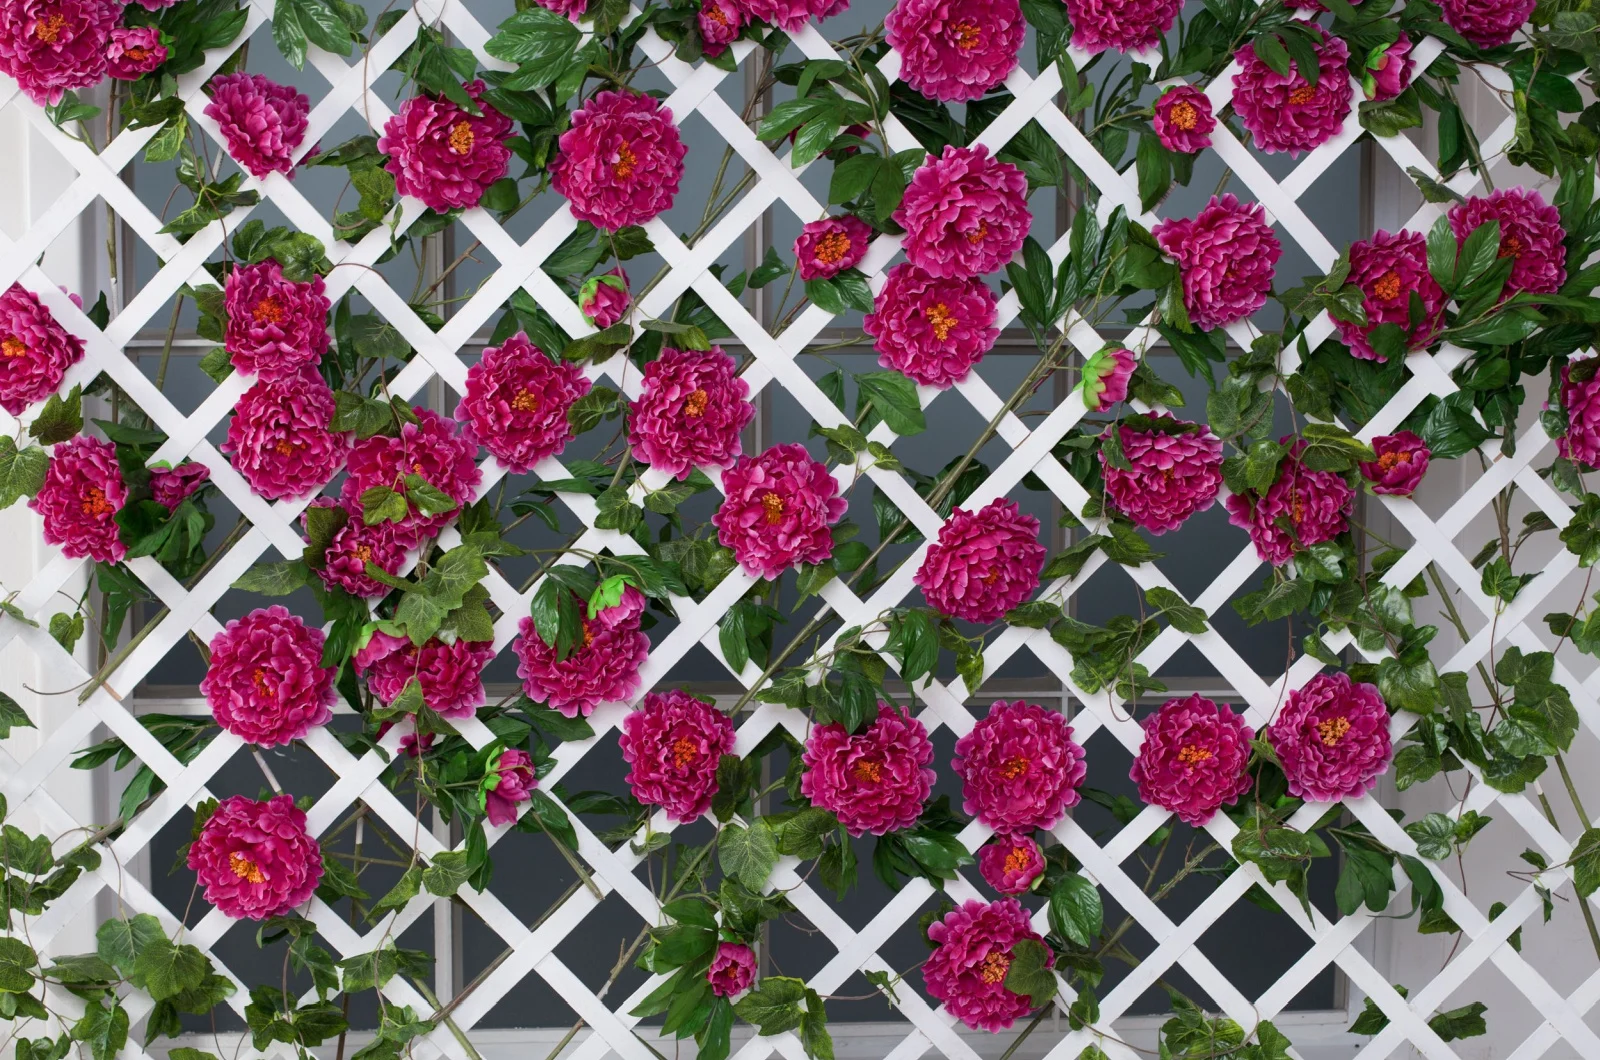 lattice fence with climbing flowers